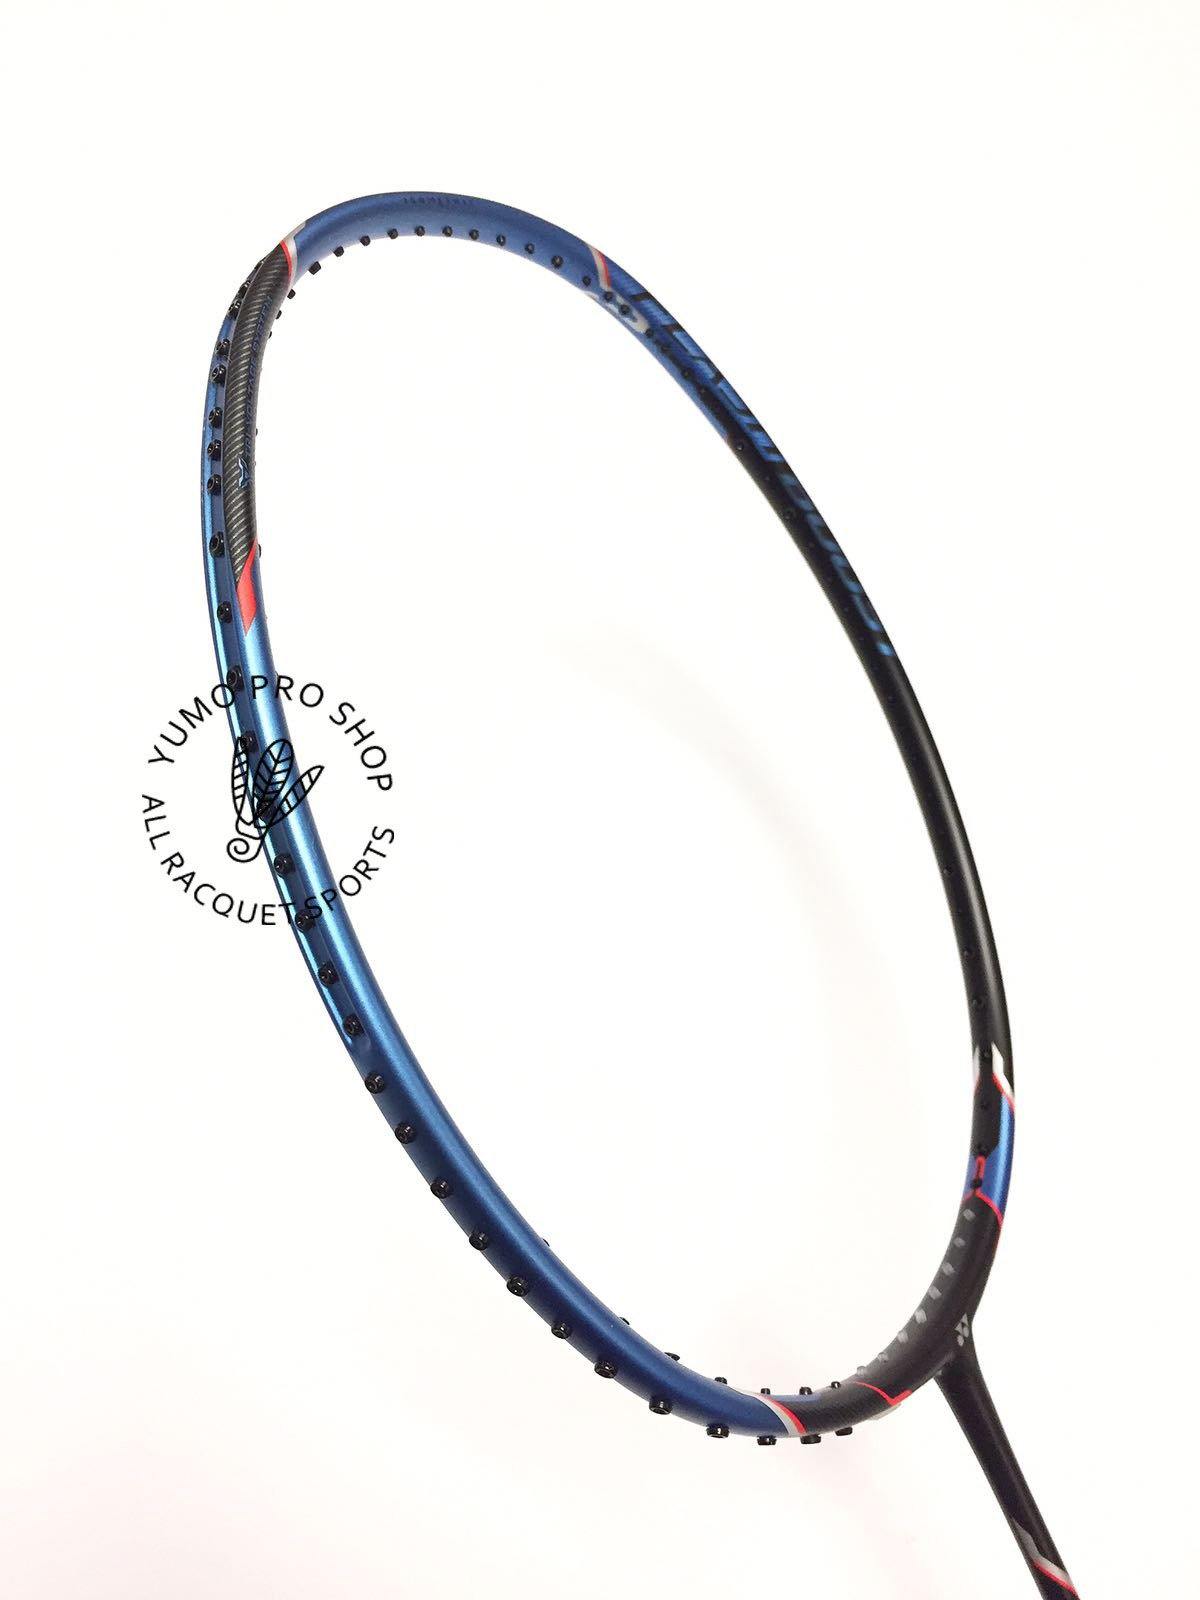  YONEX Voltric FB  Badminton Racket Blue 5U Yumo Pro 